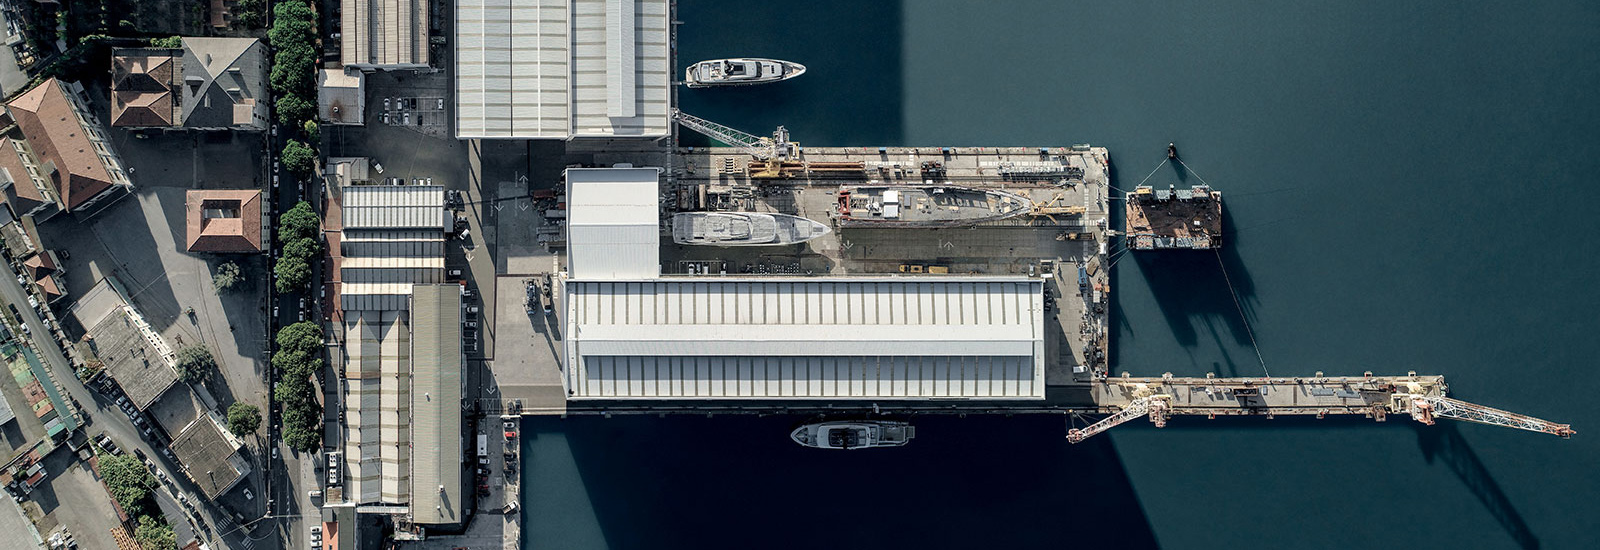 sanlorenzo yacht shipyard aerial view